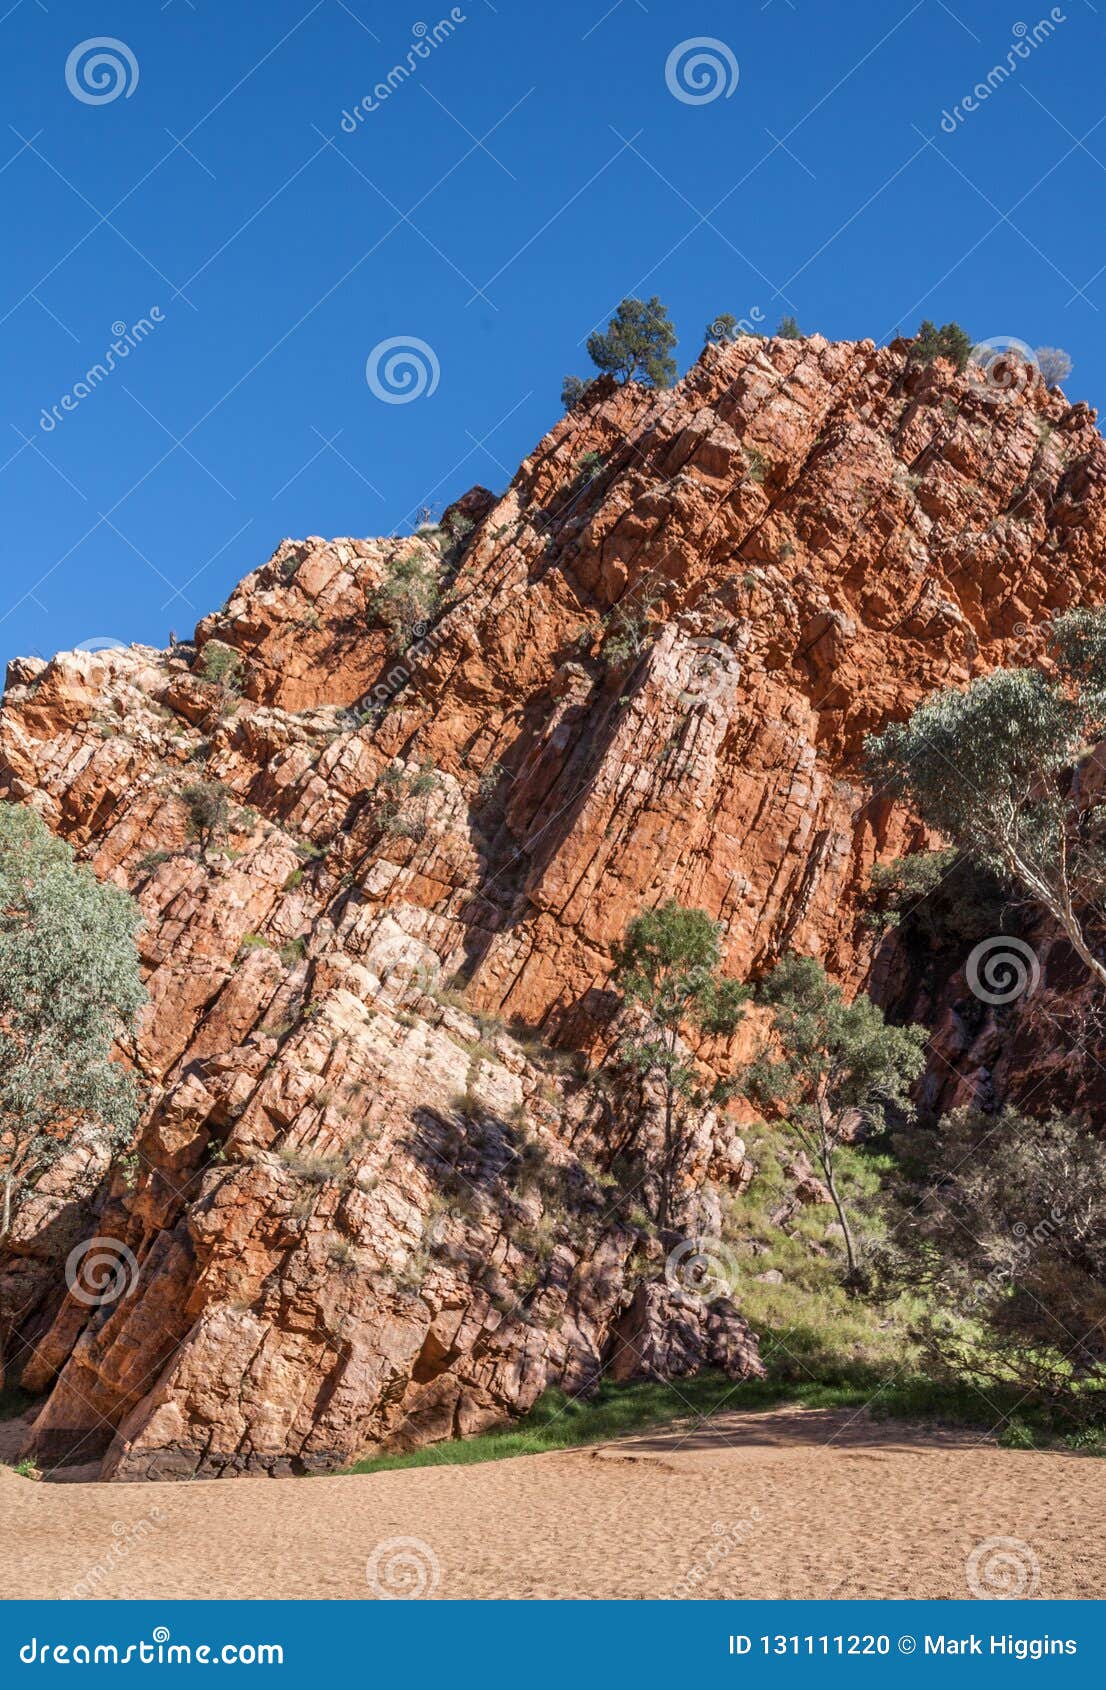 kunnarra geology an upheaval of rock